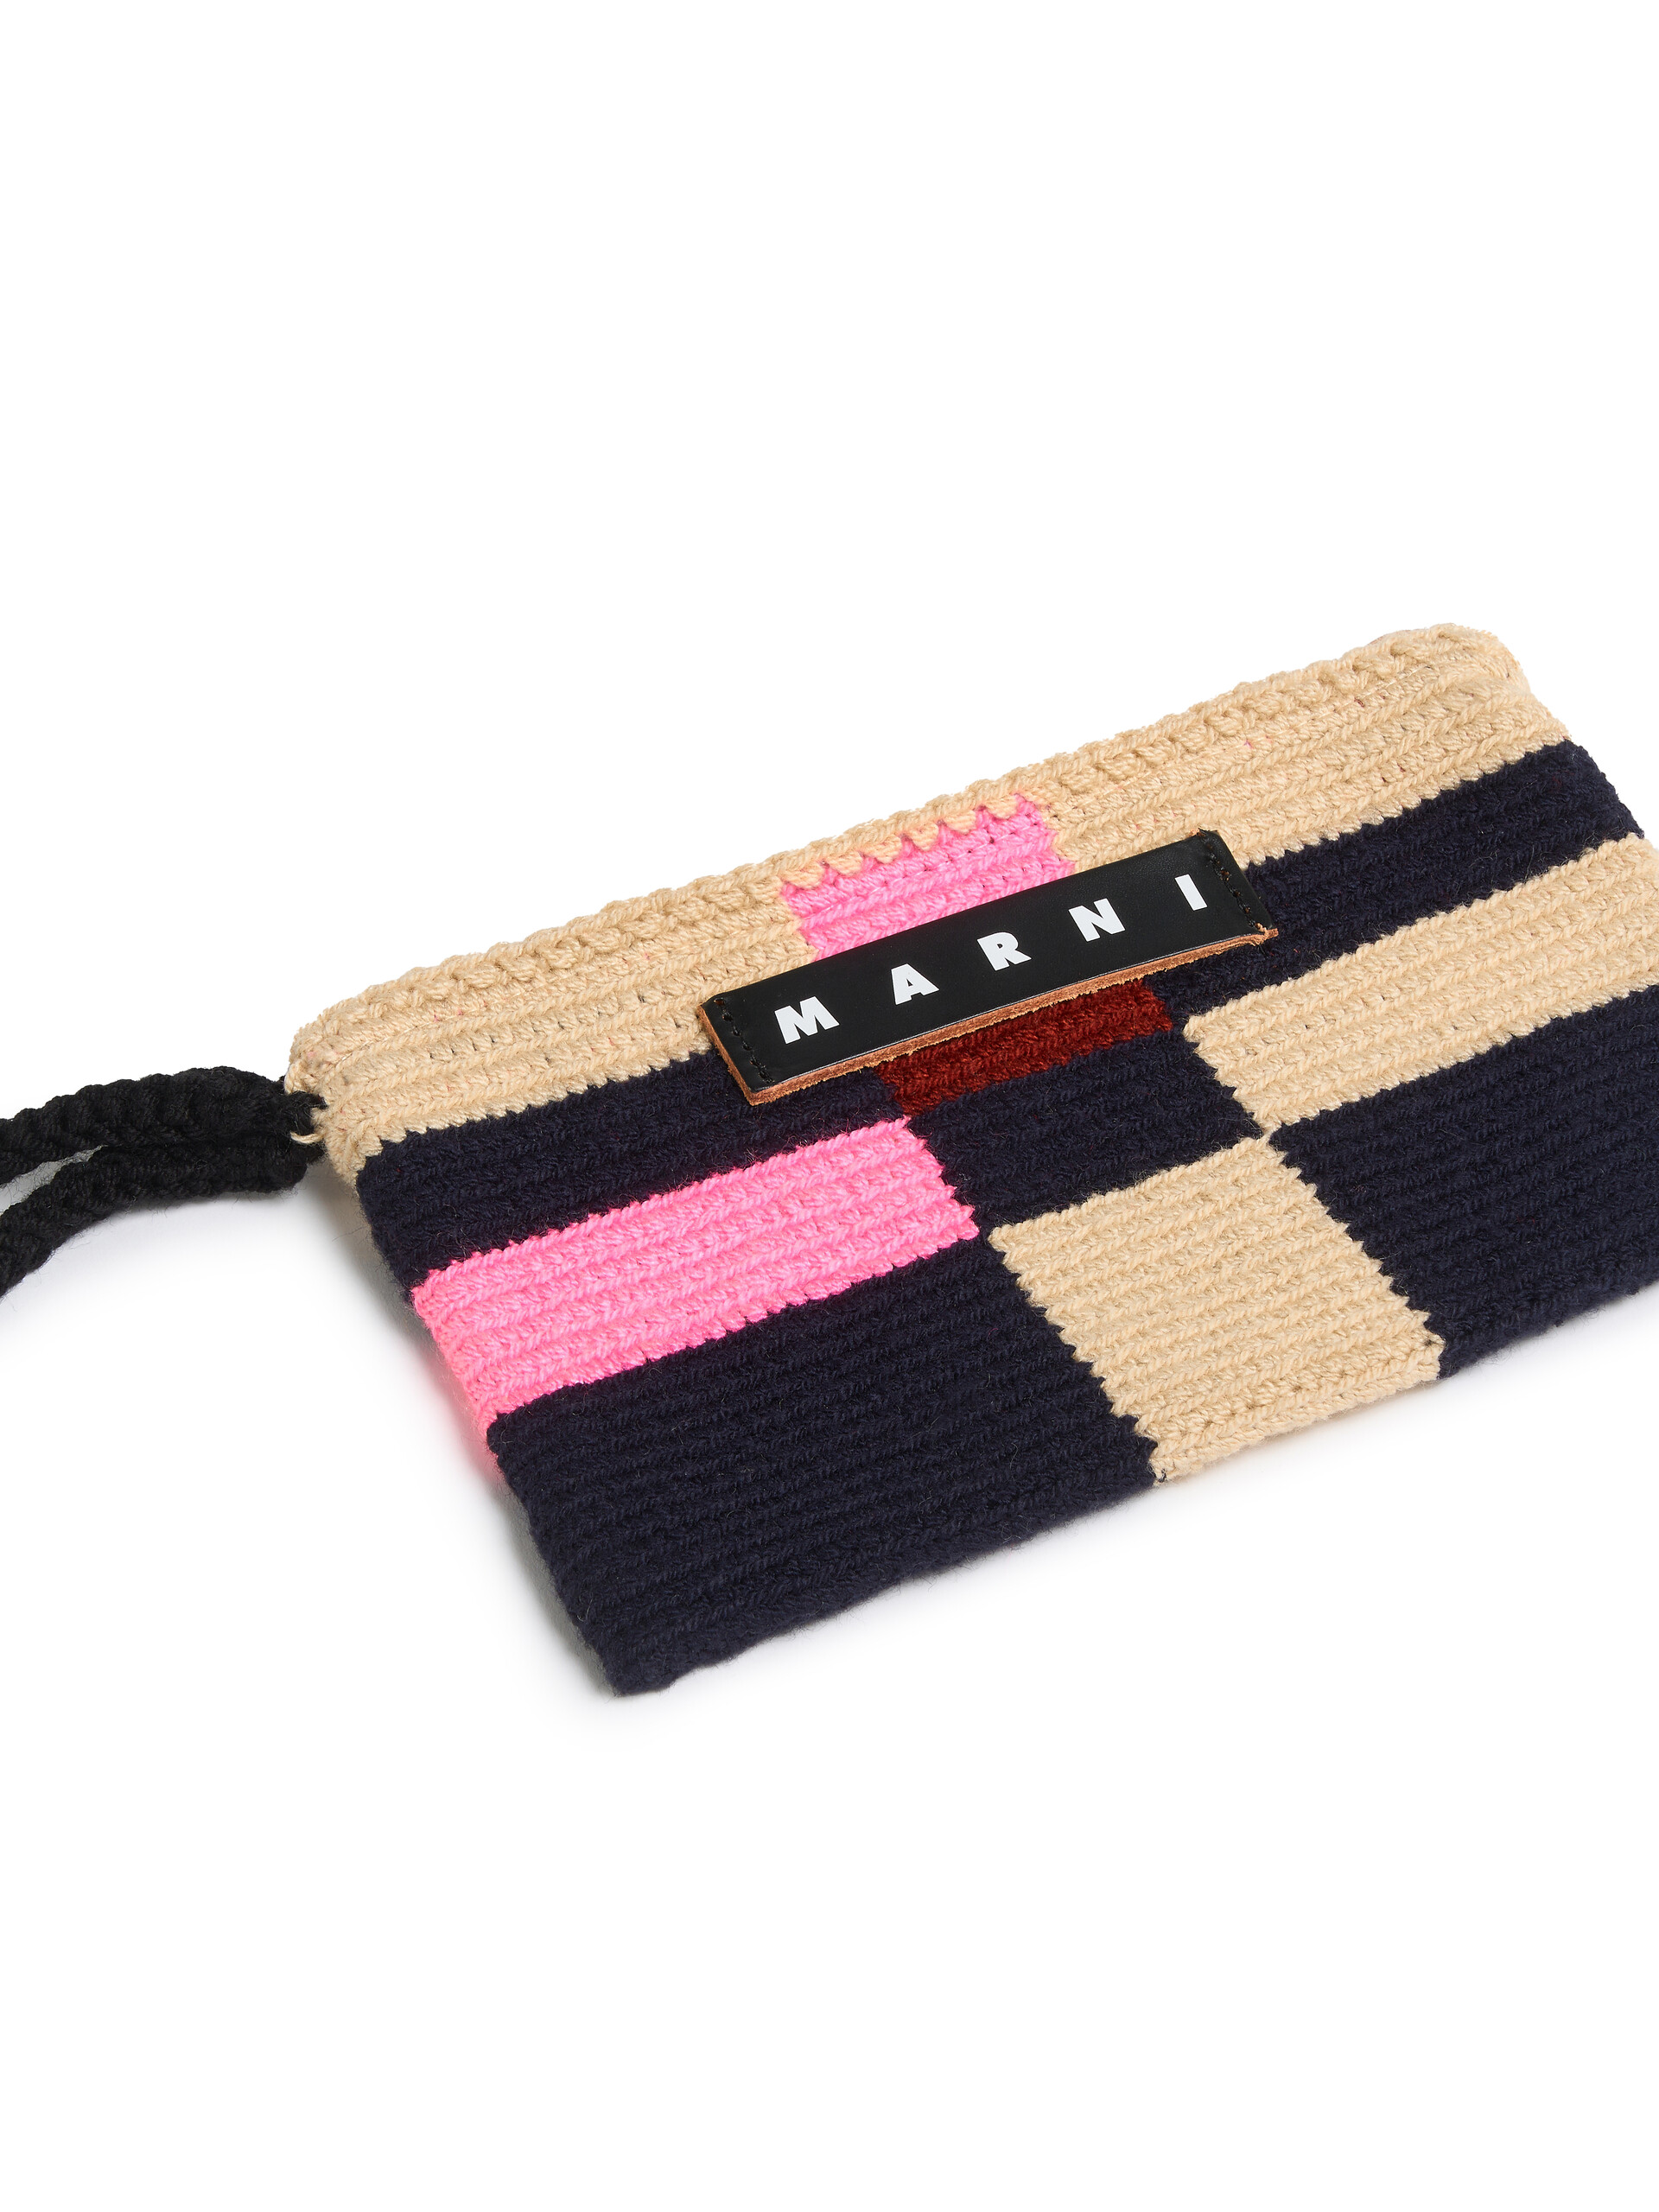 Medium colour-block intarsia MARNI MARKET tech wool pouch - Accessories - Image 3